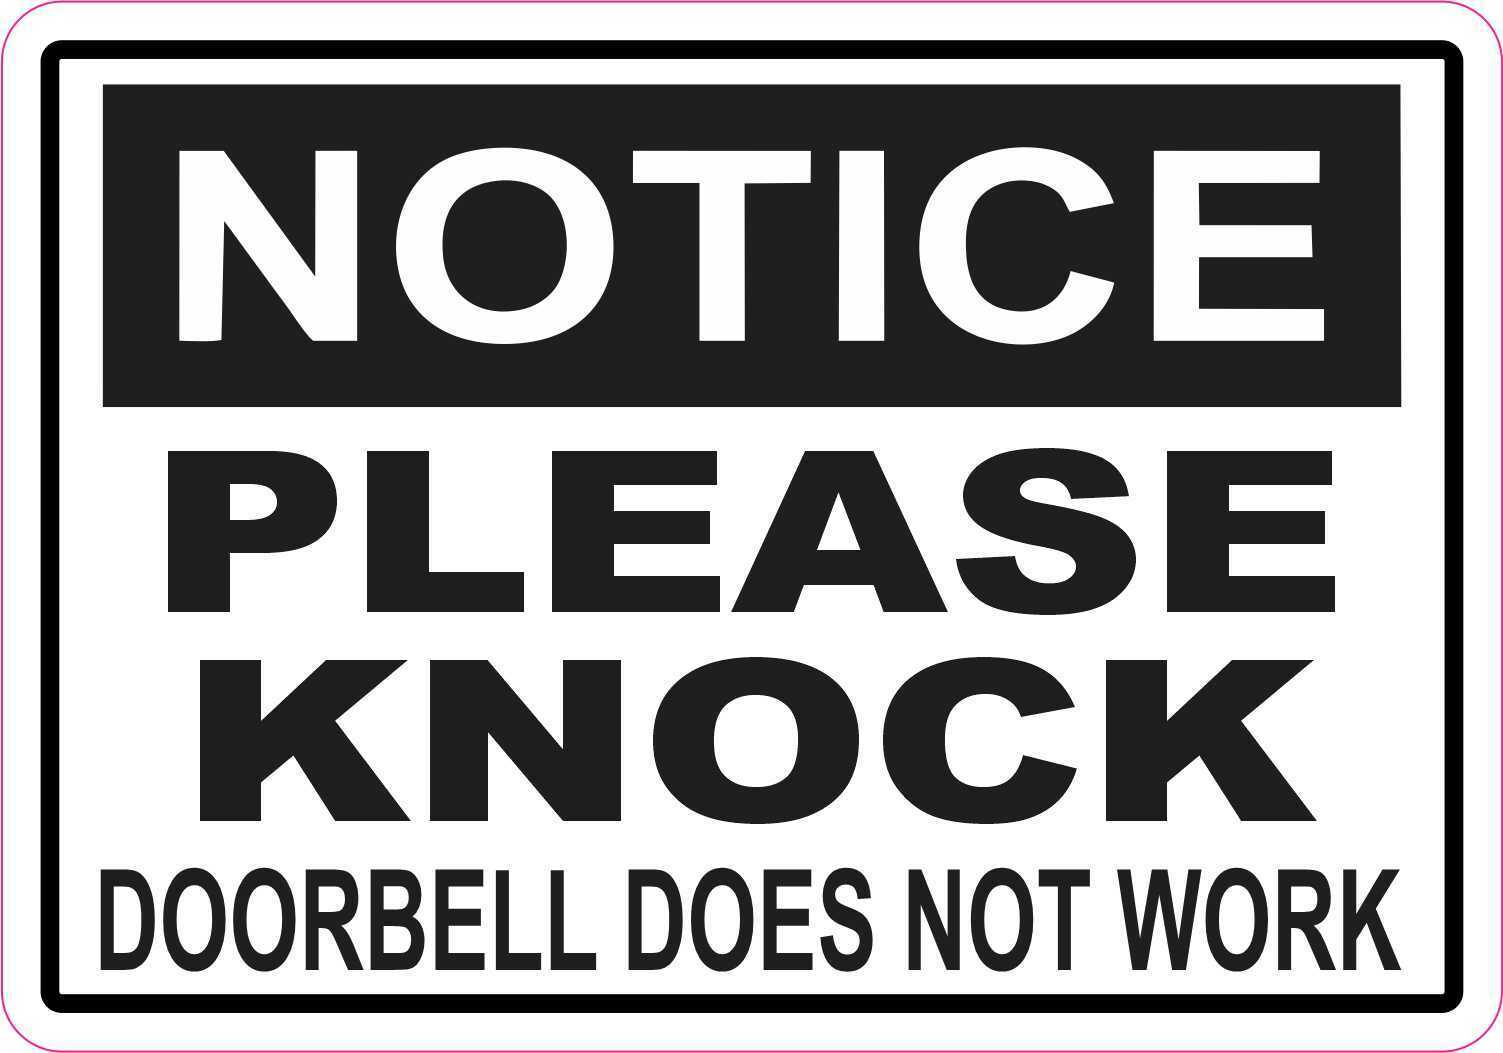 5in x 3.5in Doorbell Does Not Work Please Knock Vinyl Sticker Sign Decal